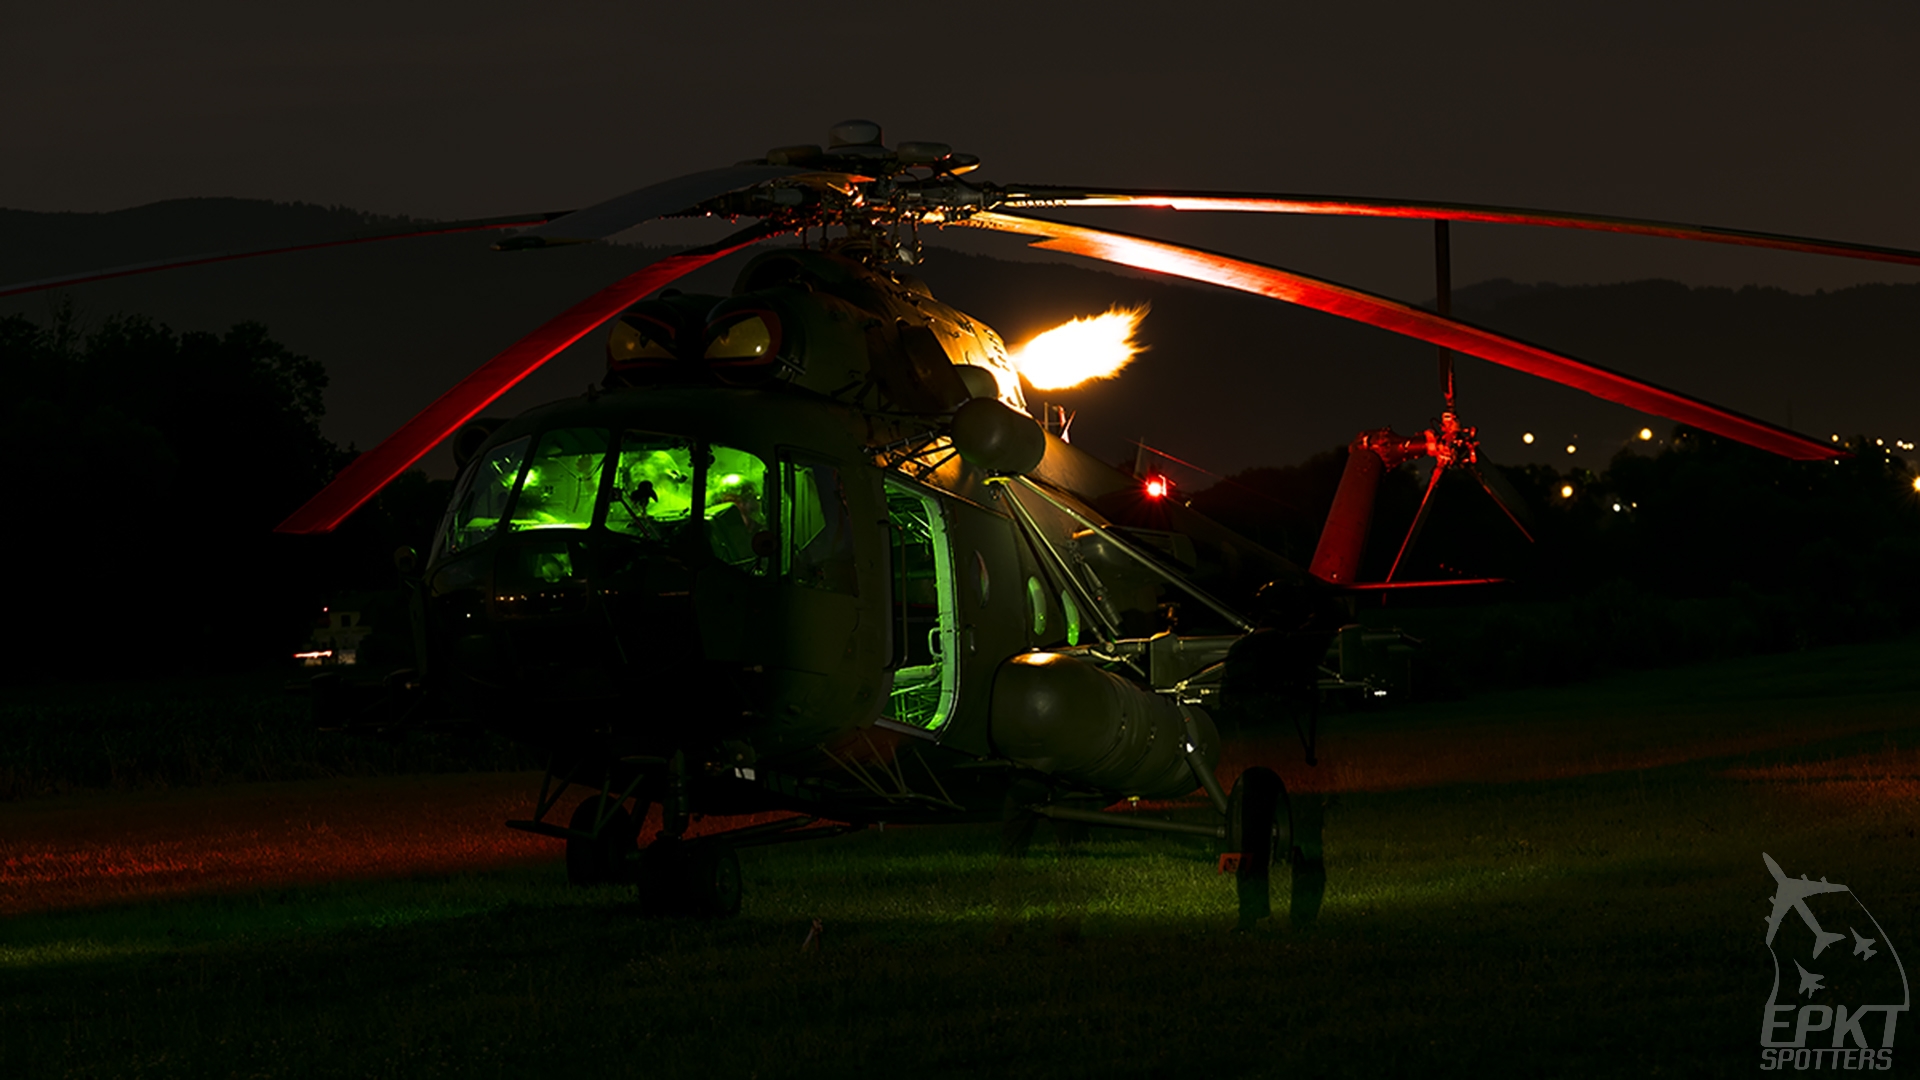 6112 - Mil Mi-17 -1V Hip (Poland - Army) / Other location - Lipowa Poland [/]